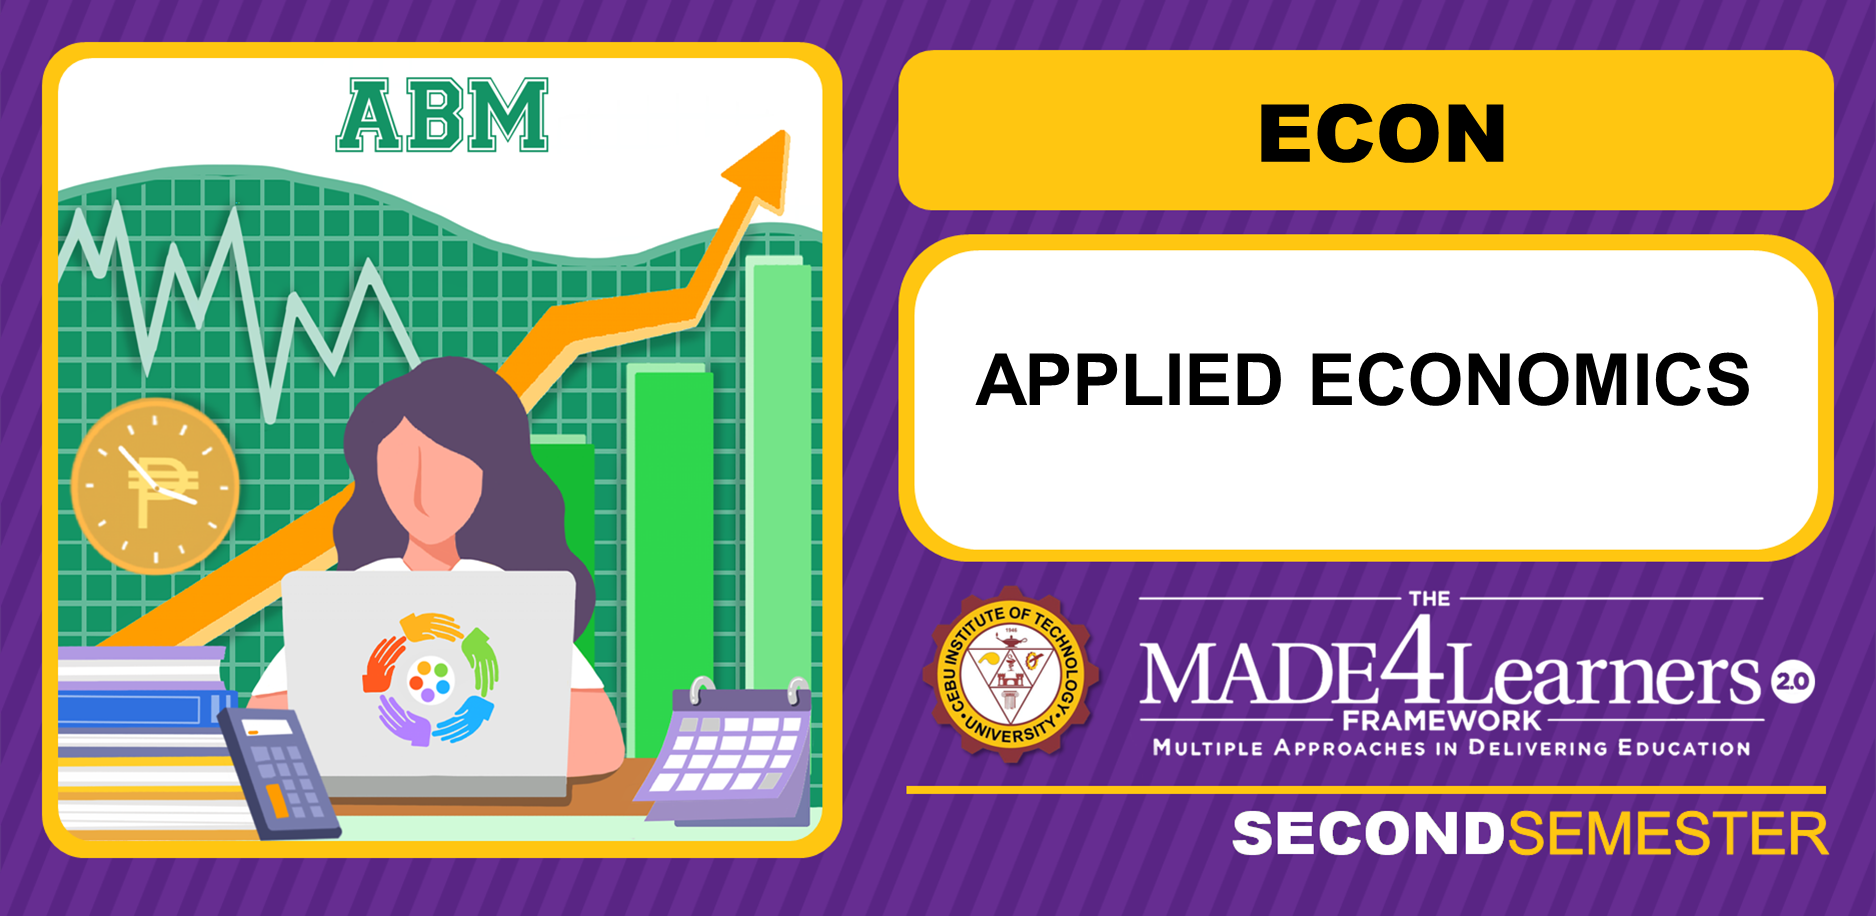 ECON: Applied Economics (Calo)